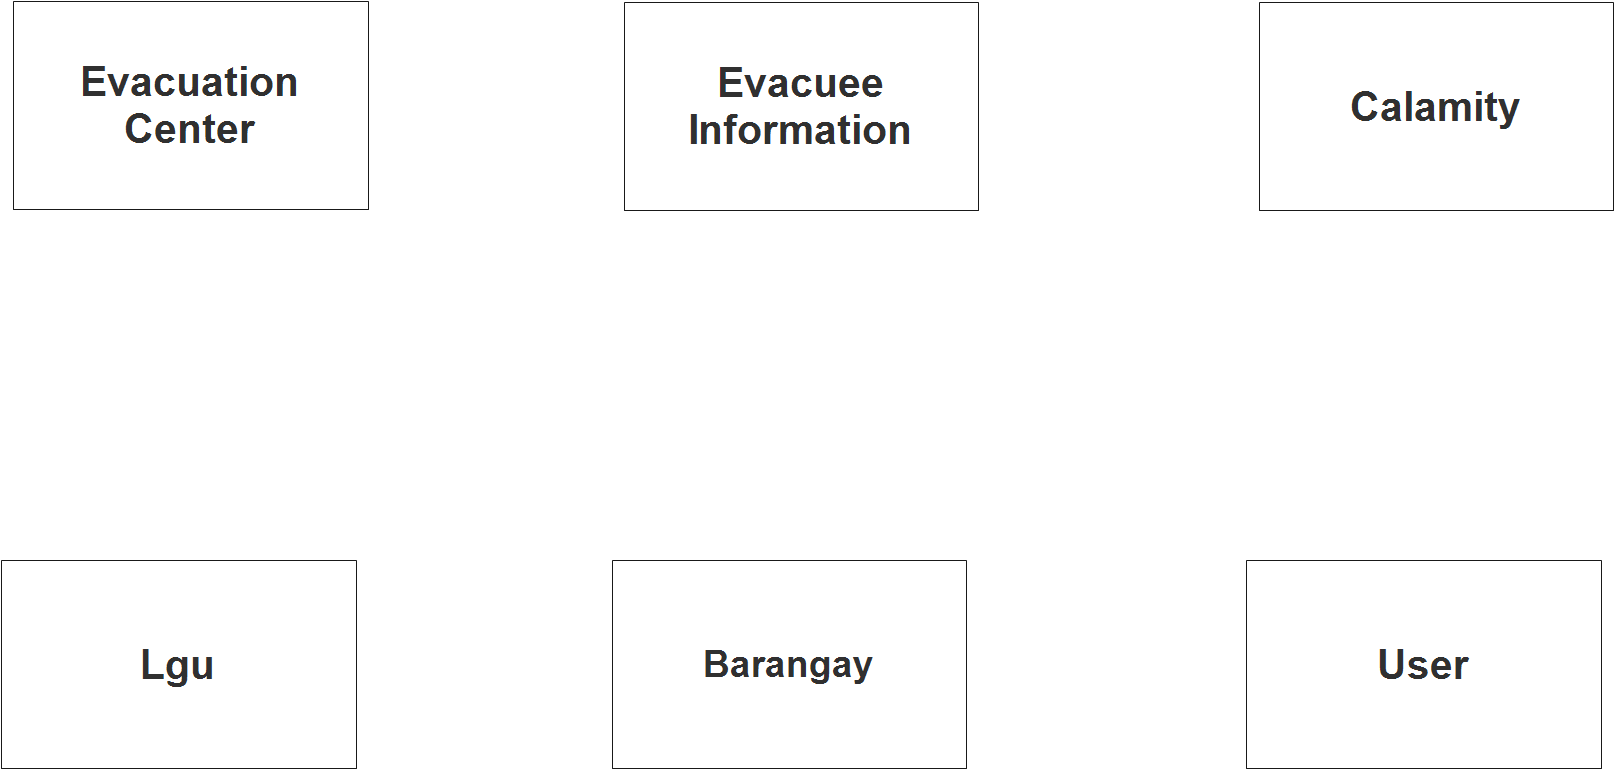 Evacuation Center Management System ER Diagram - Step 1 Identify Entities